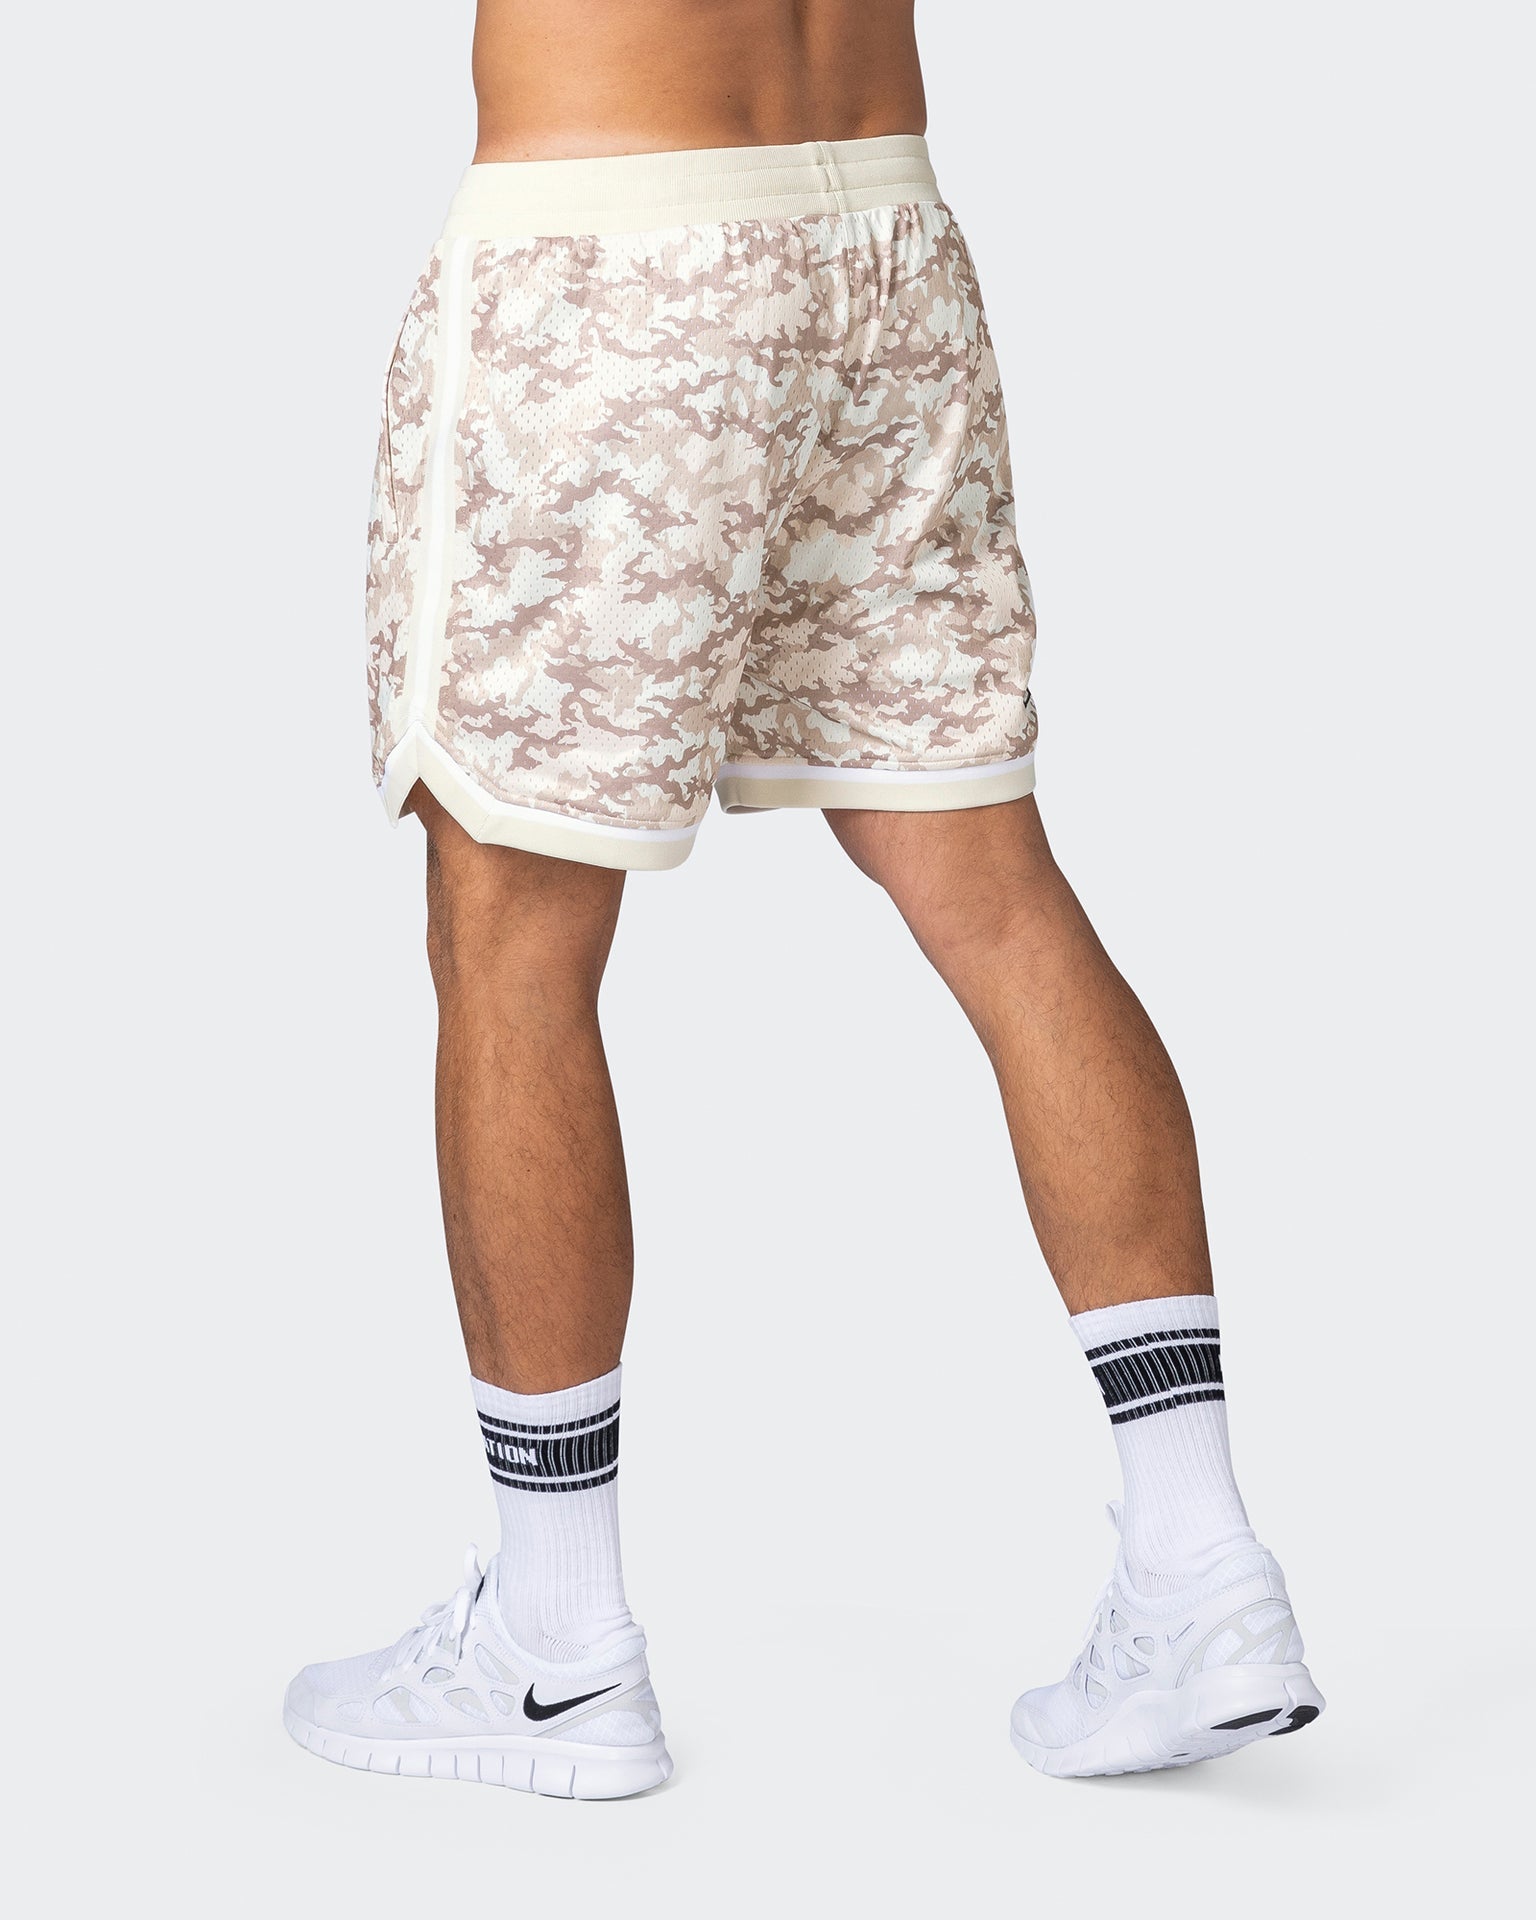 musclenation Shorts Mens 5" Basketball Shorts - Beige Camo Print